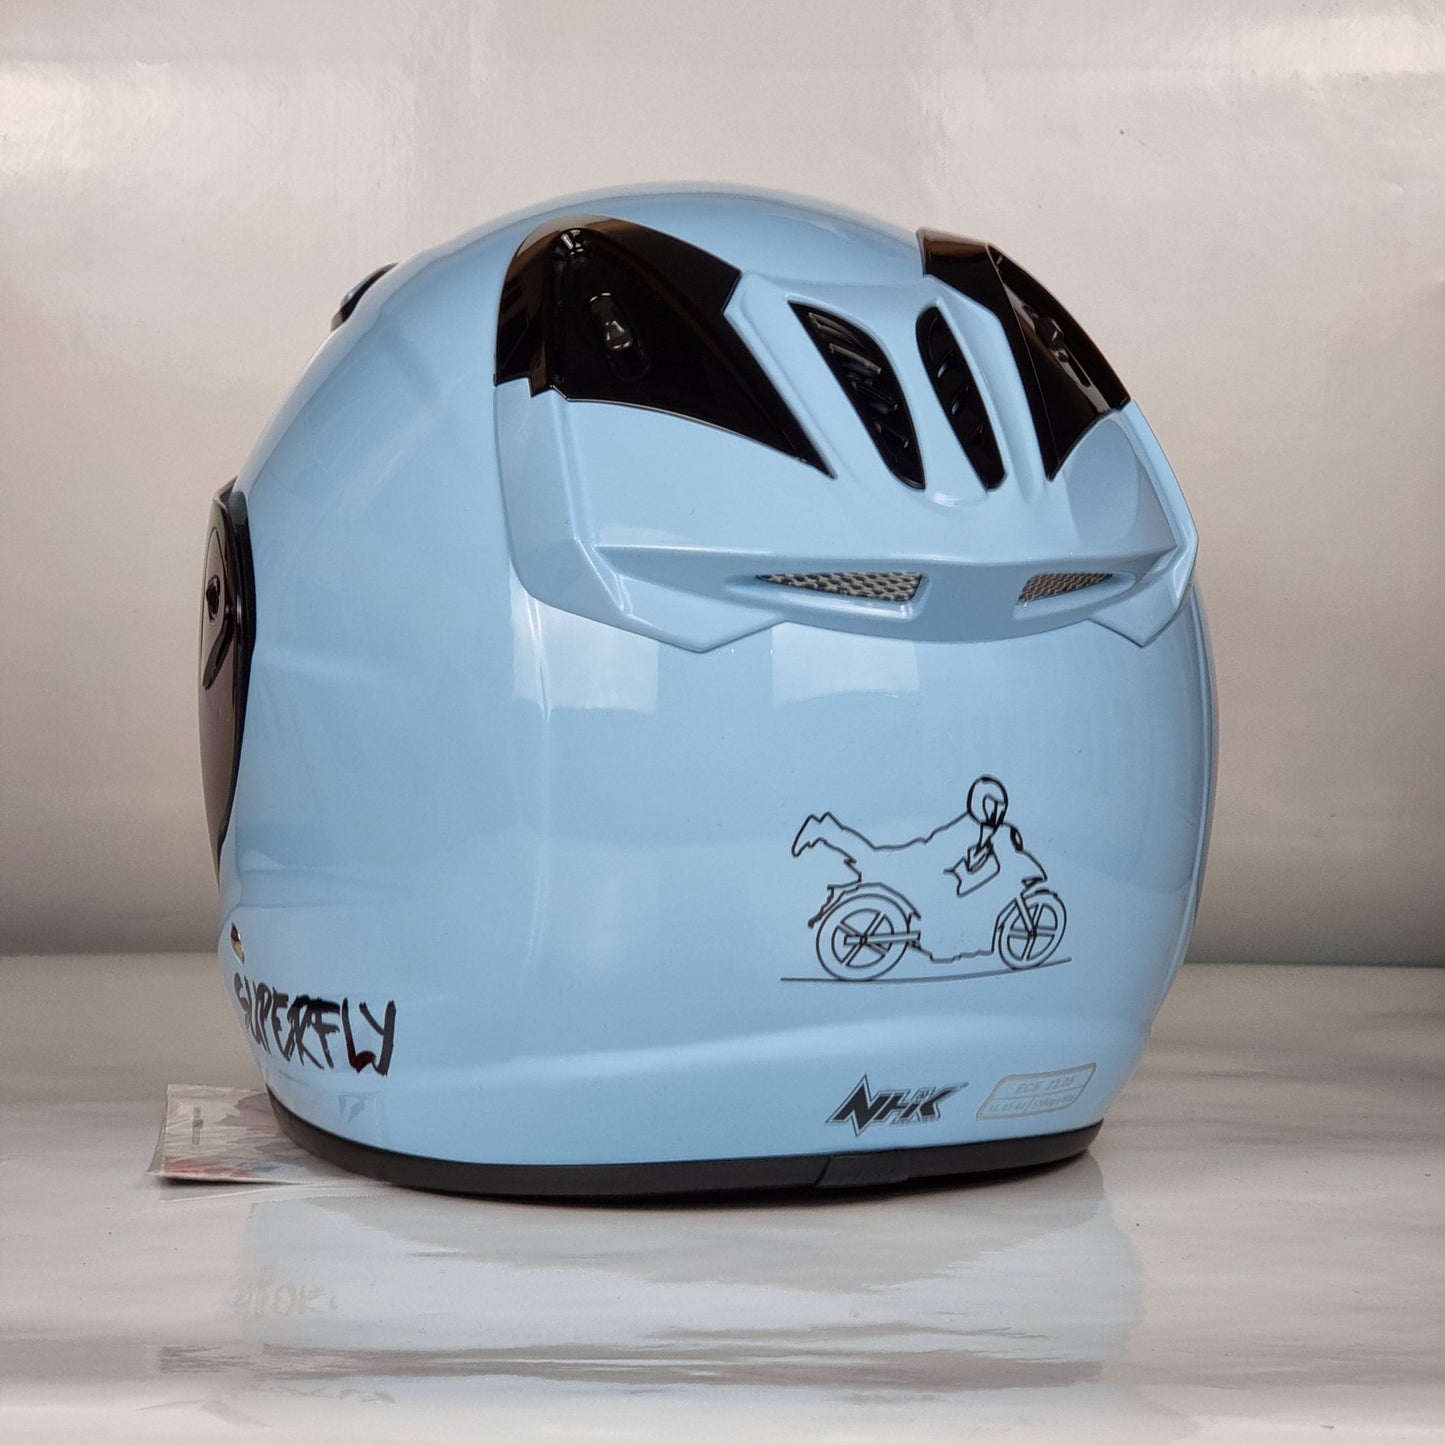 NHK Helmet X SUPERFLY R6 v2 Solid (T.Blue Glossy)